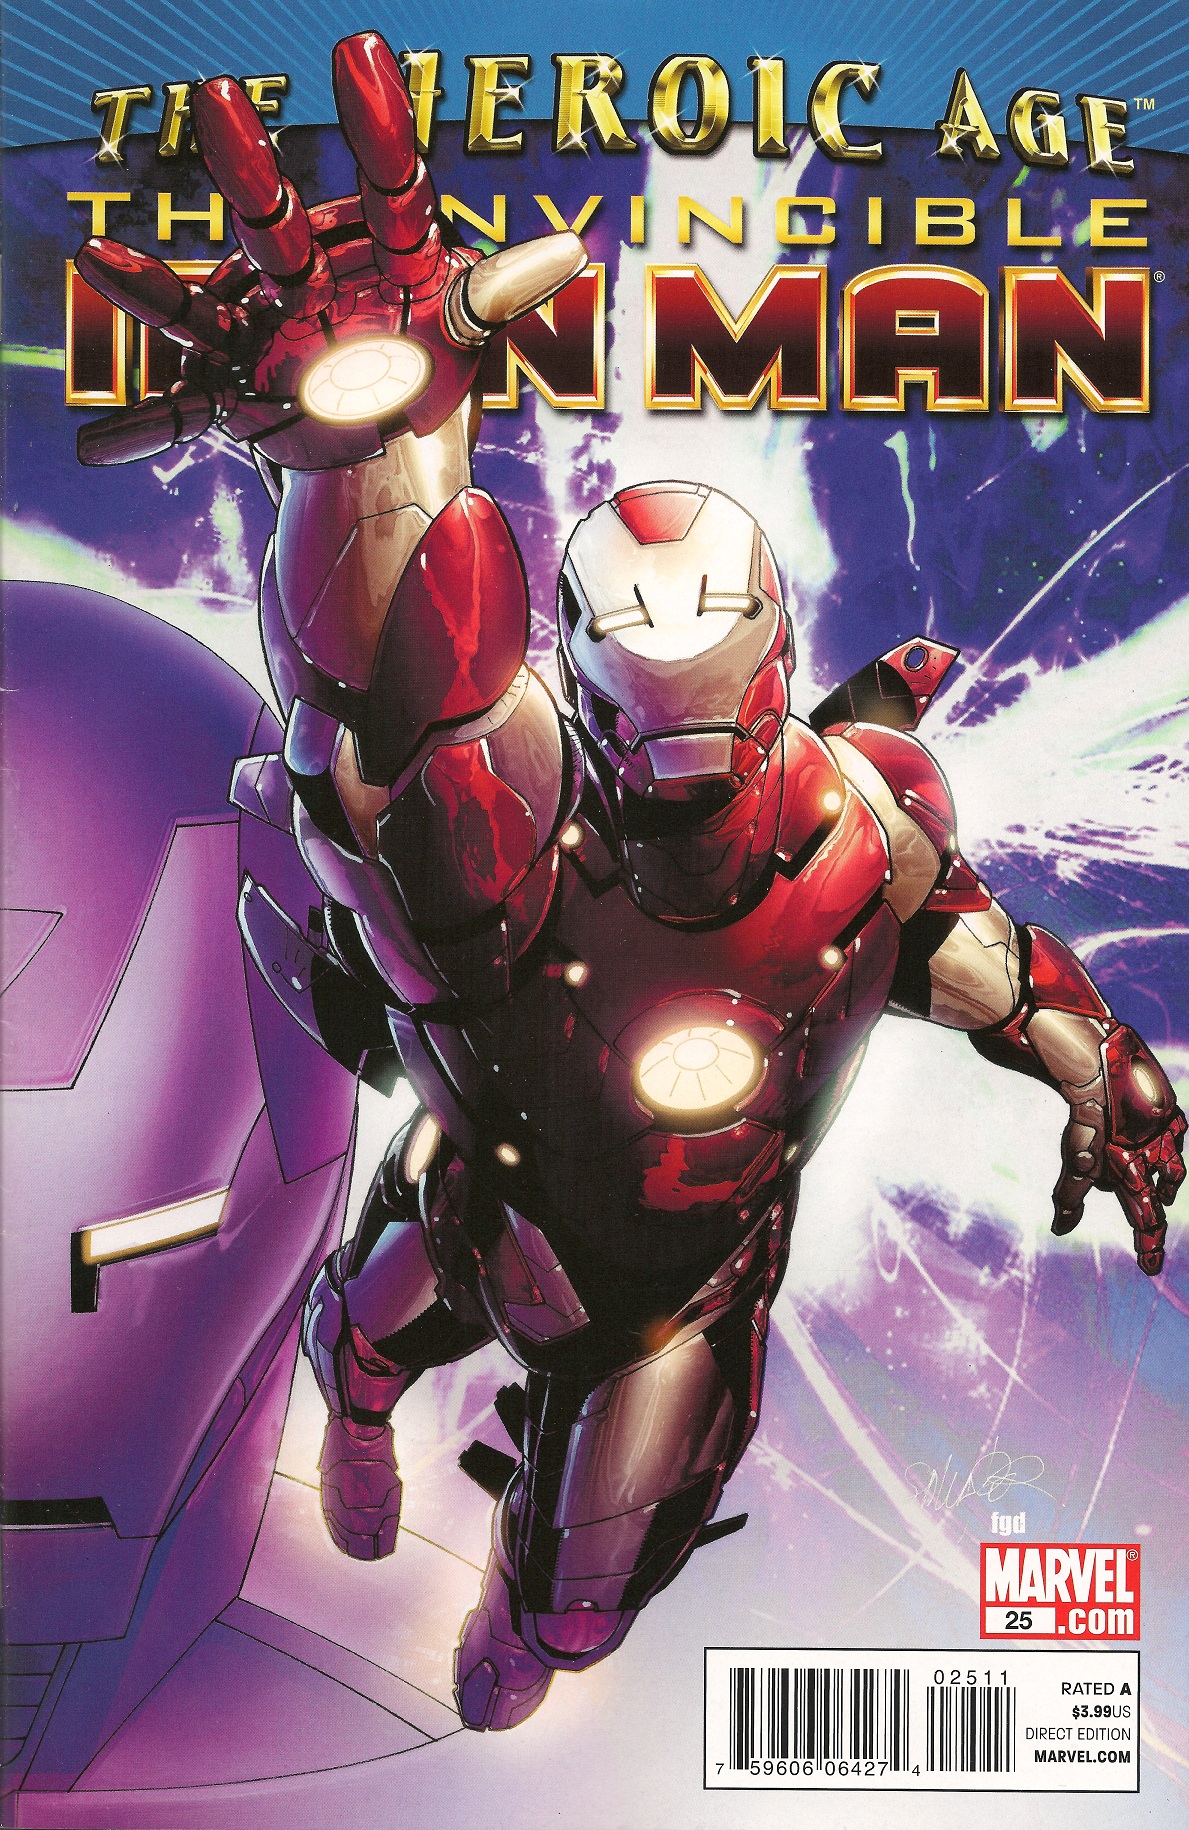 invincible iron man 1 variant